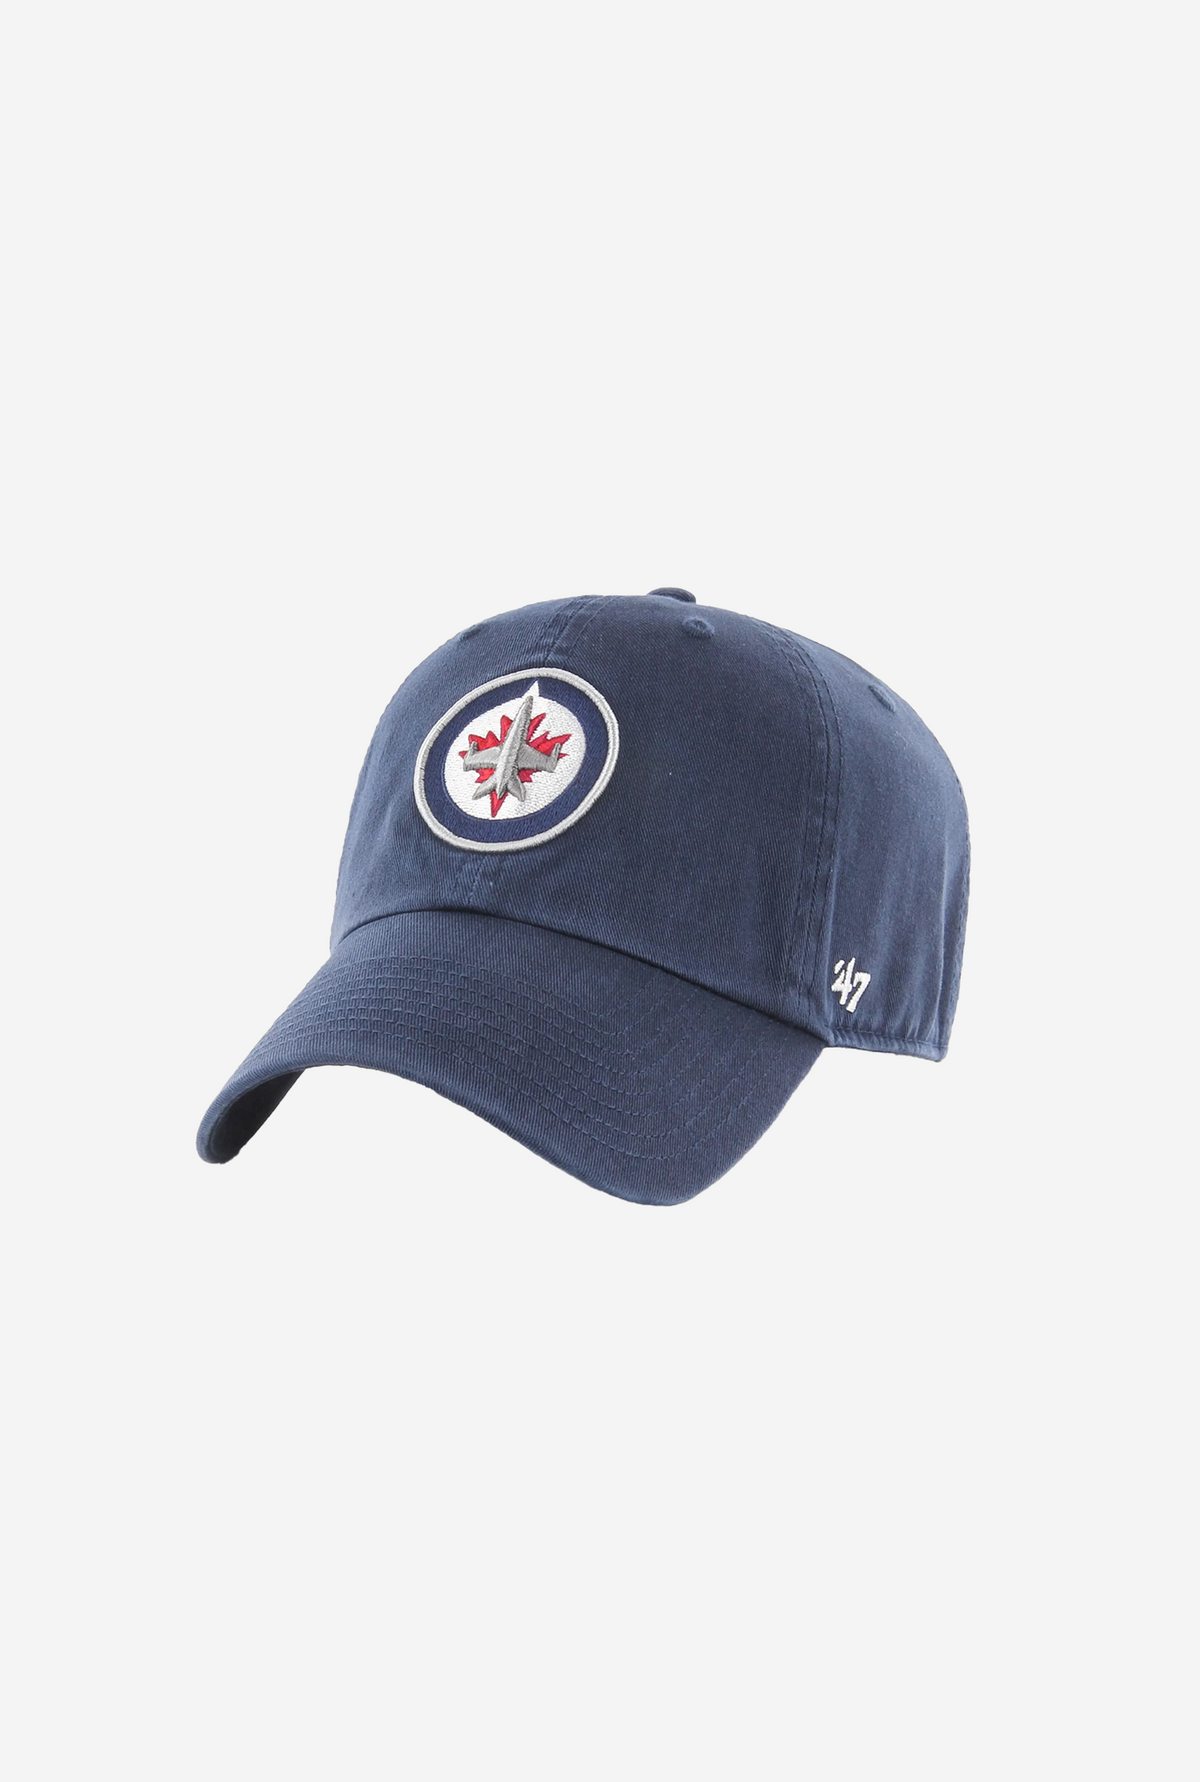 Winnipeg Jets Clean Up Cap